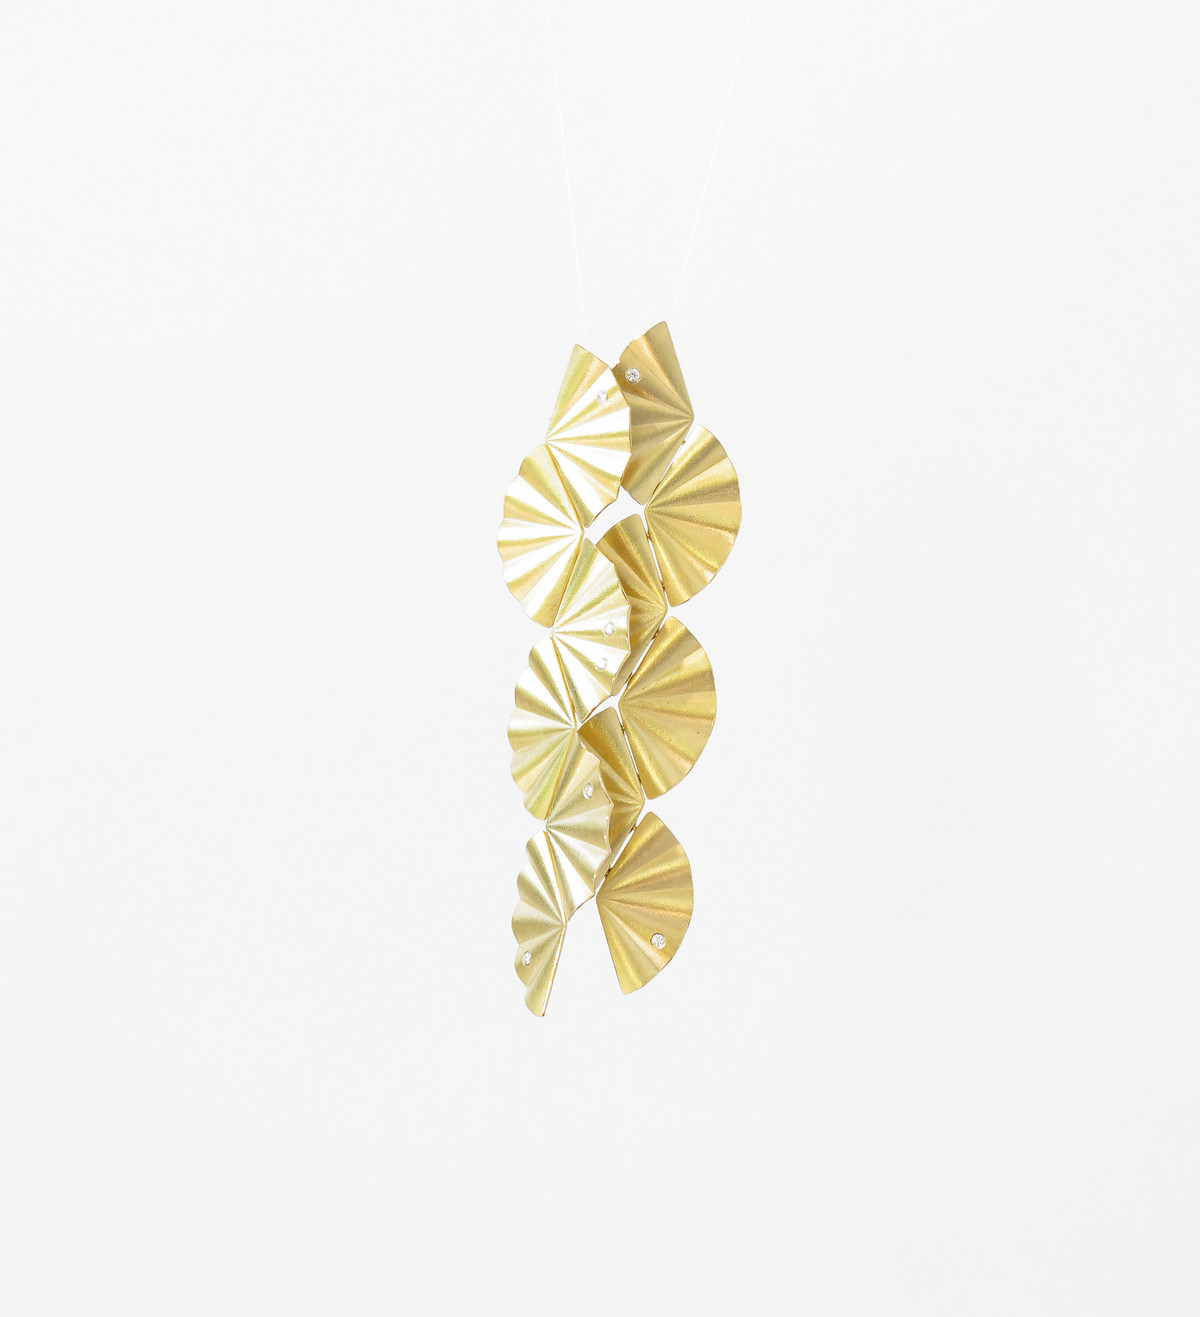 18k gold earrings Maiko with diamonds 0,12ct